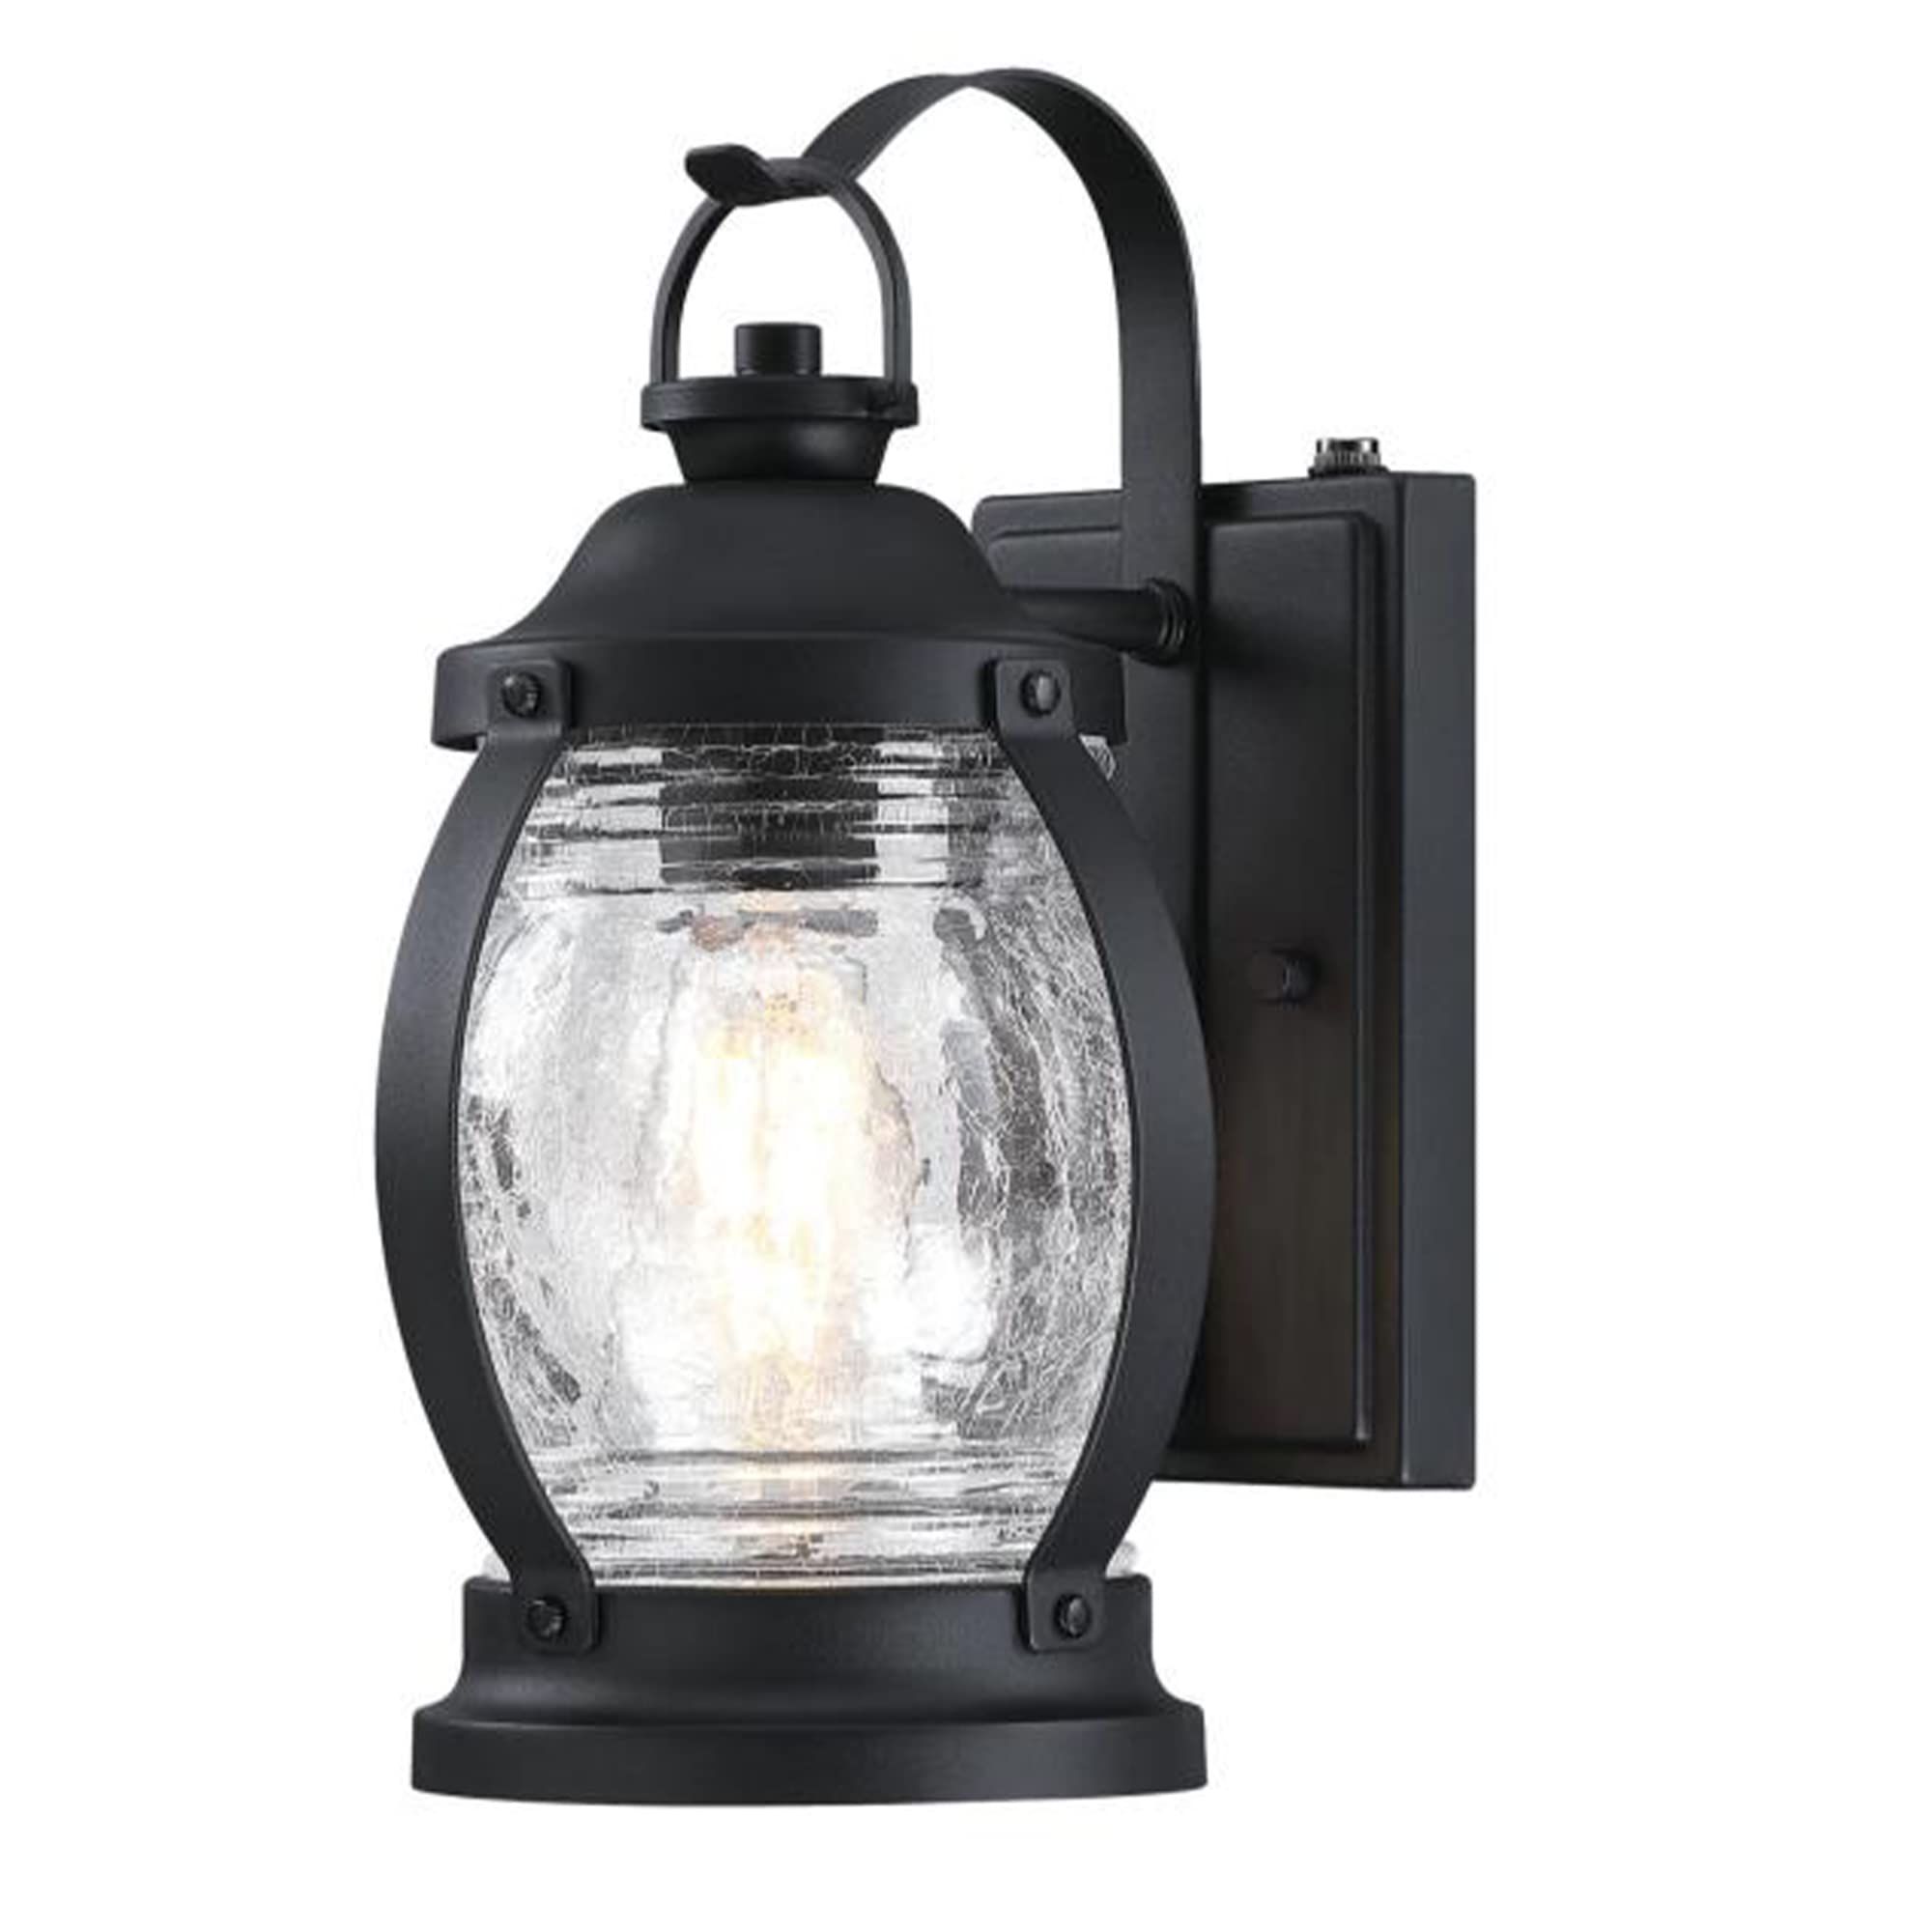 Ciata Lighting One-Light Weather Resistant, 60Watt, E26 Medium Base Indoor/Outdoor Wall Lantern Sconce/Fixture  - Very Good